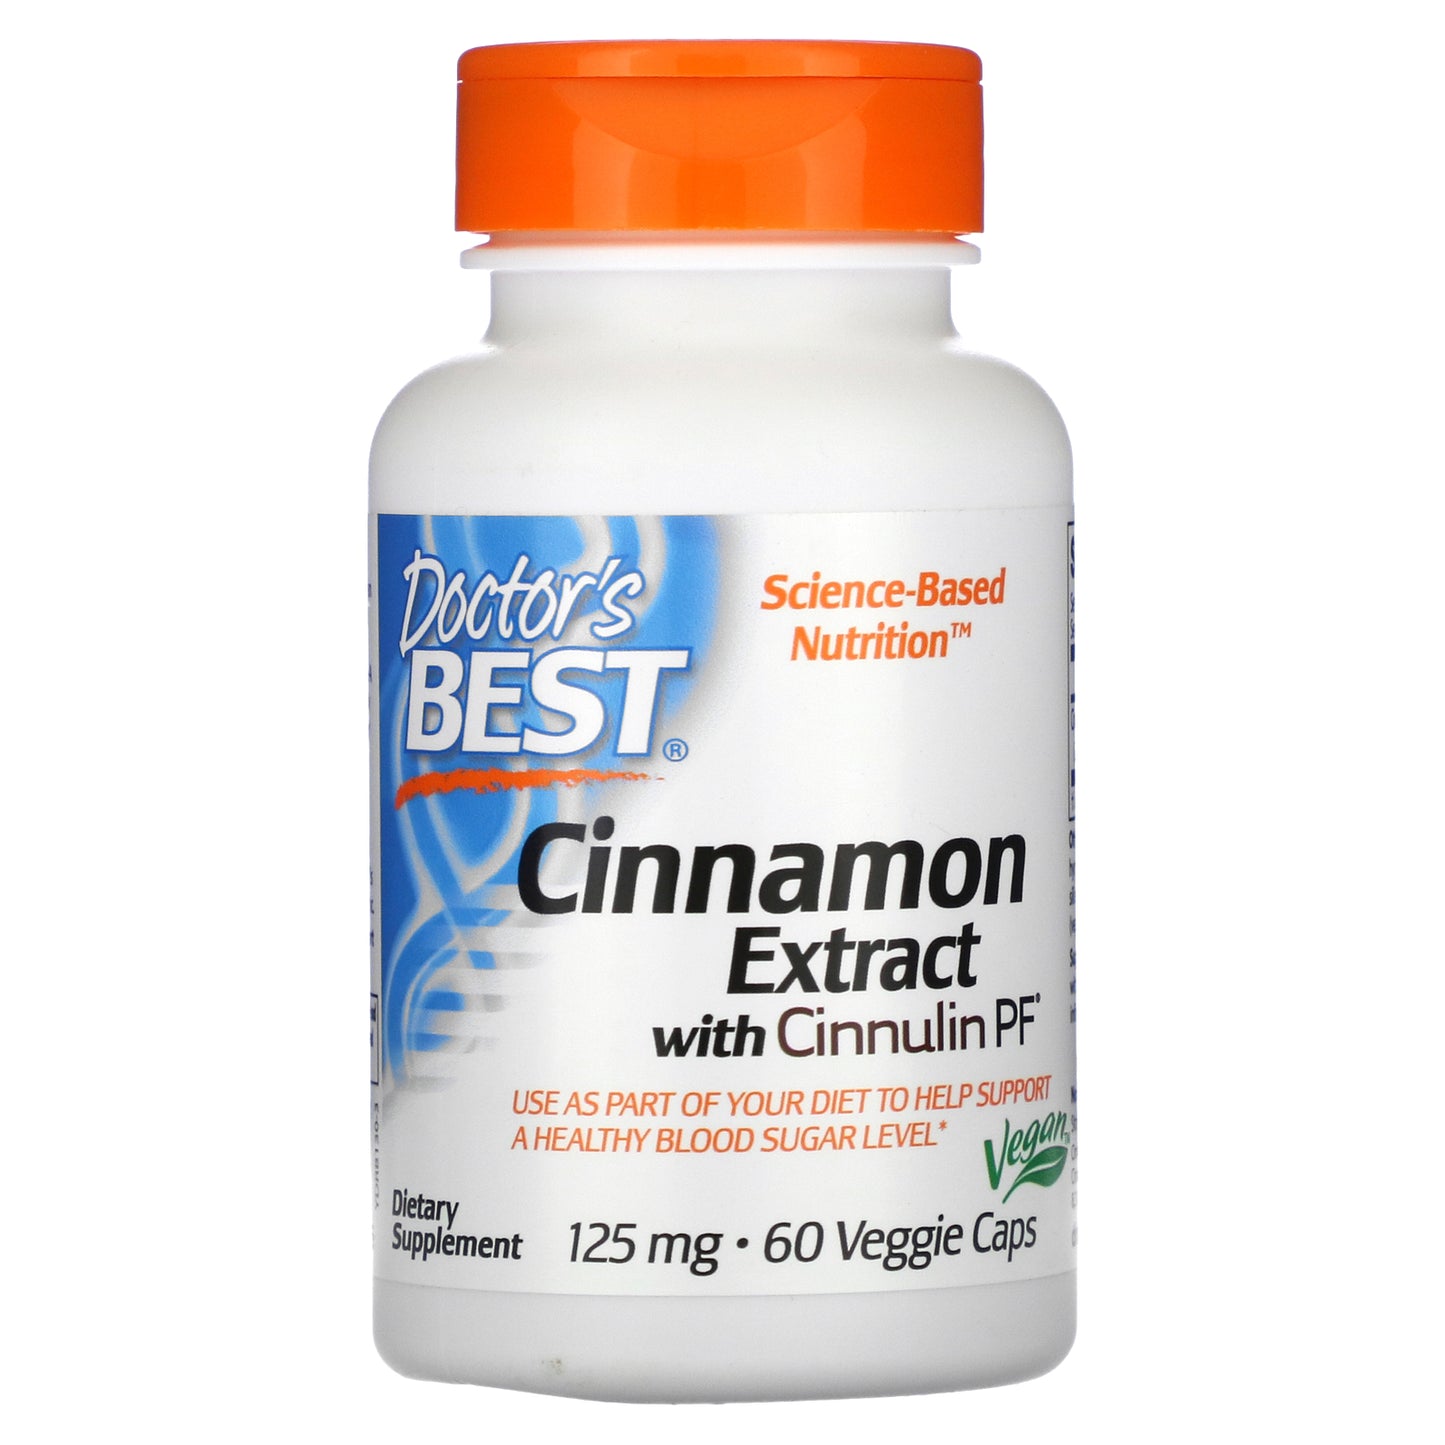 Doctor's Best Cinnamon Extract with Cinnulin PF, 125 mg, 60 Veggie Caps